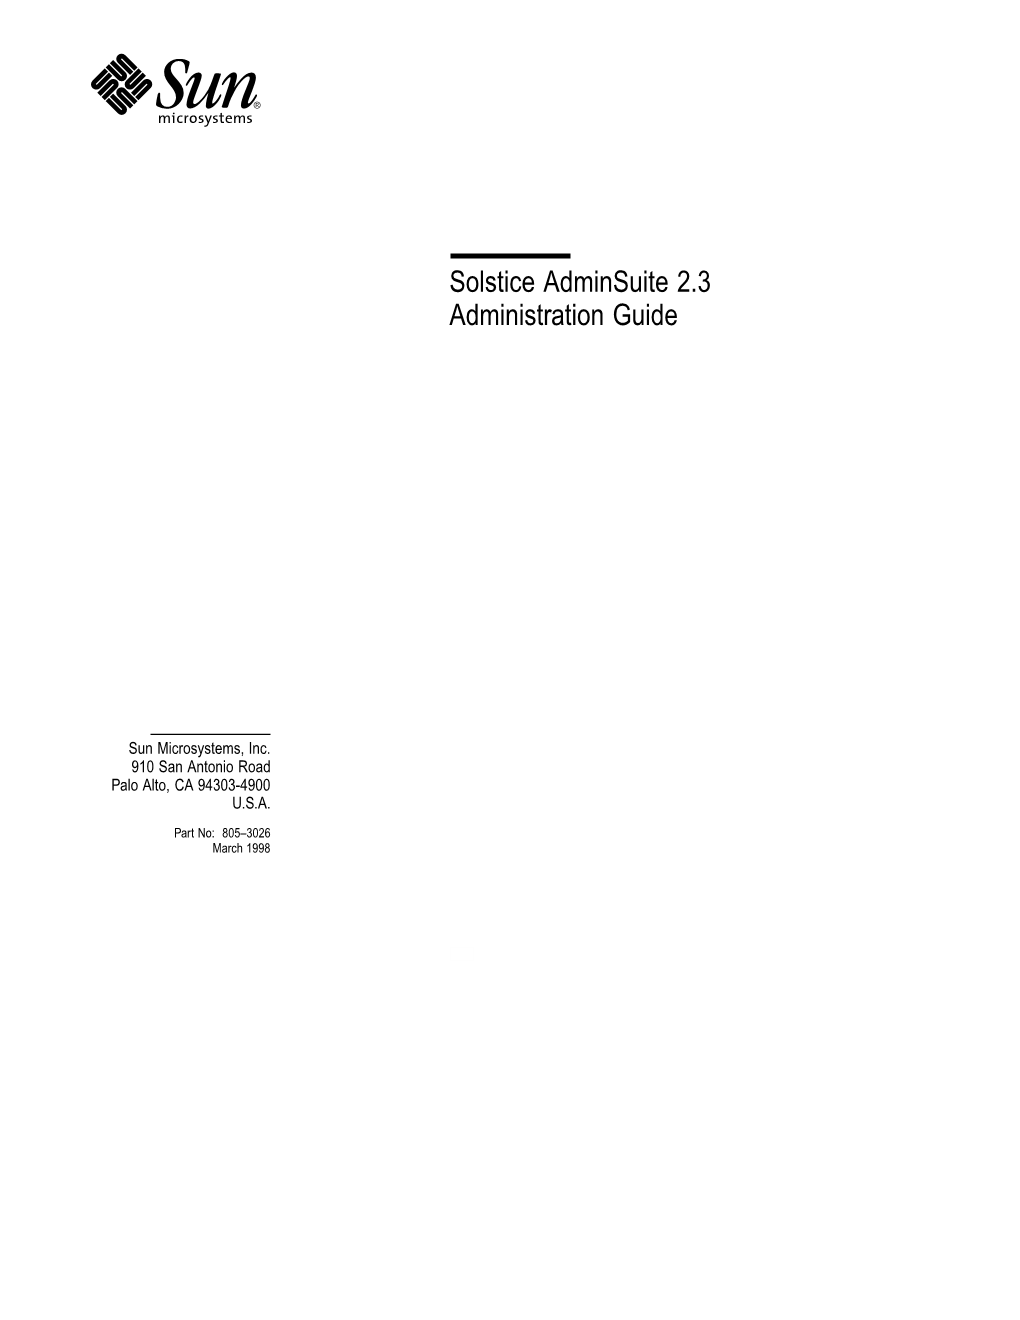 Solstice Adminsuite 2.3 Administration Guide